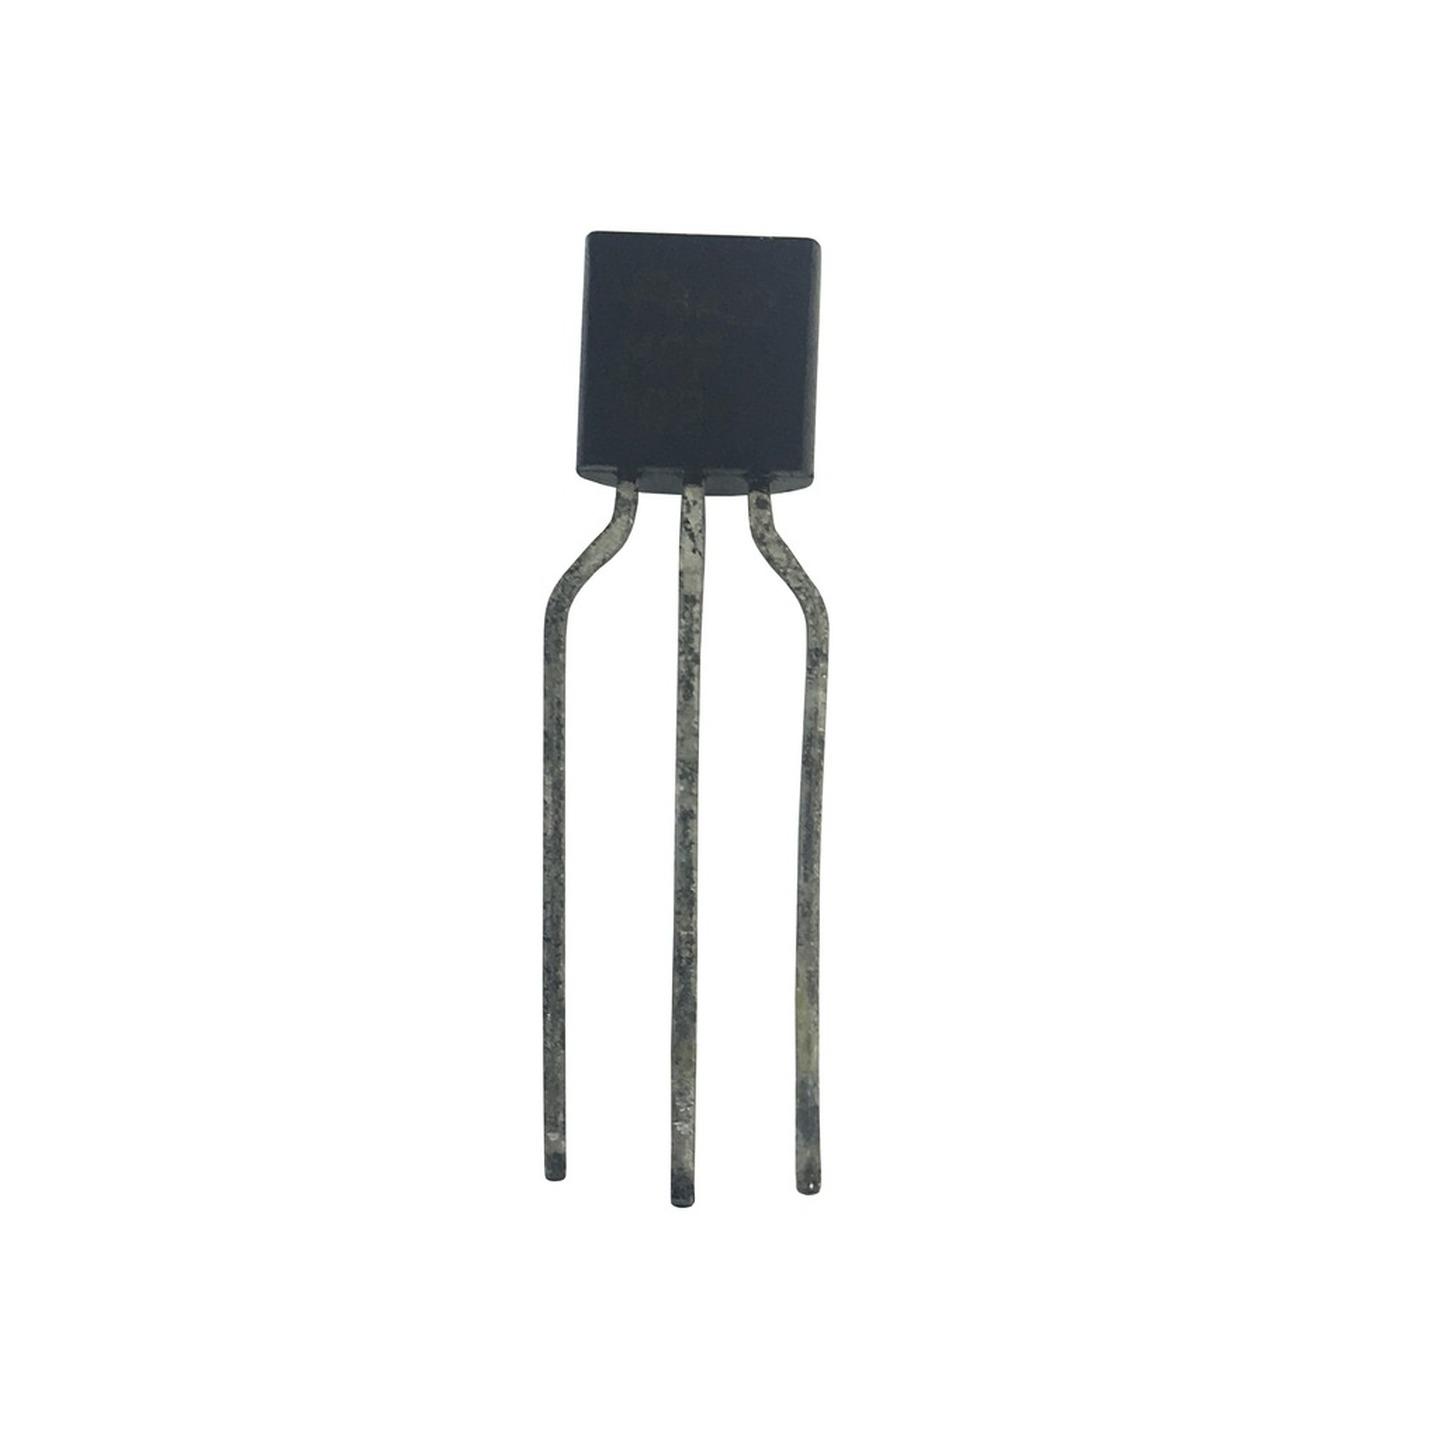 BC549 NPN Transistor